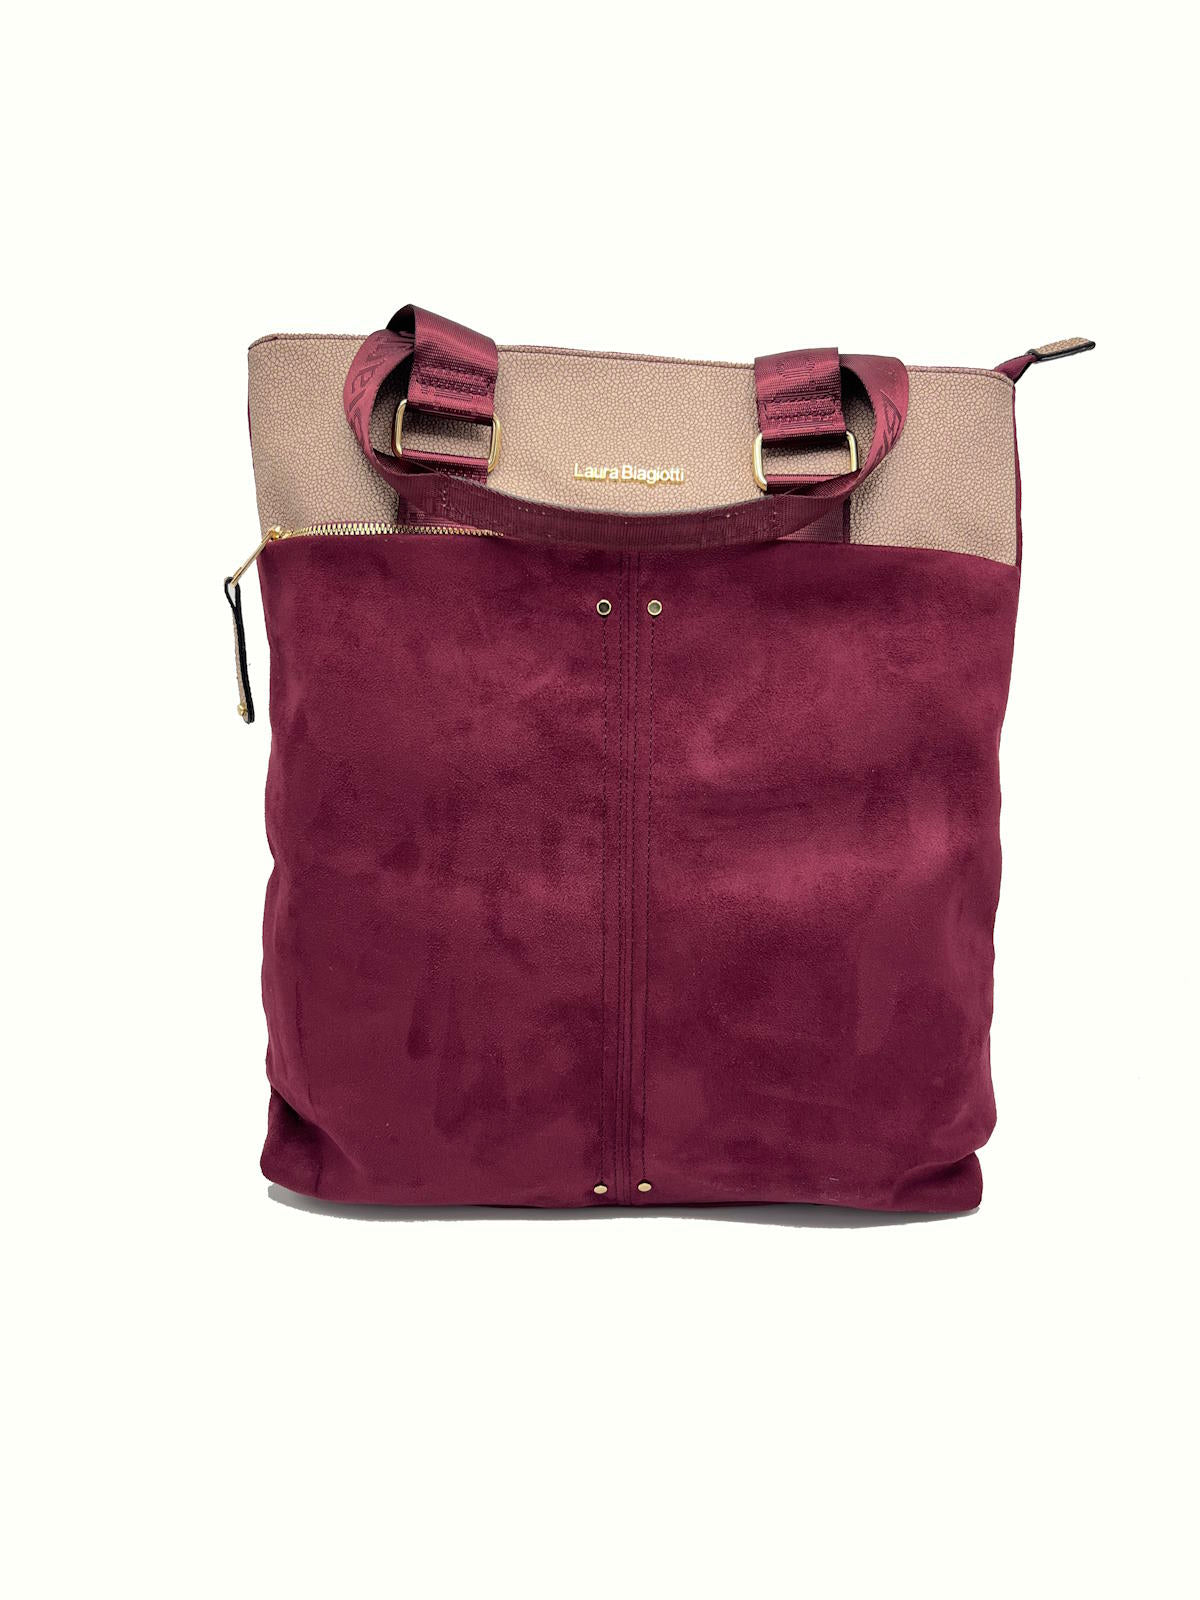 Eco leather backpack, brand Laura Biagiotti, art. LB102-6